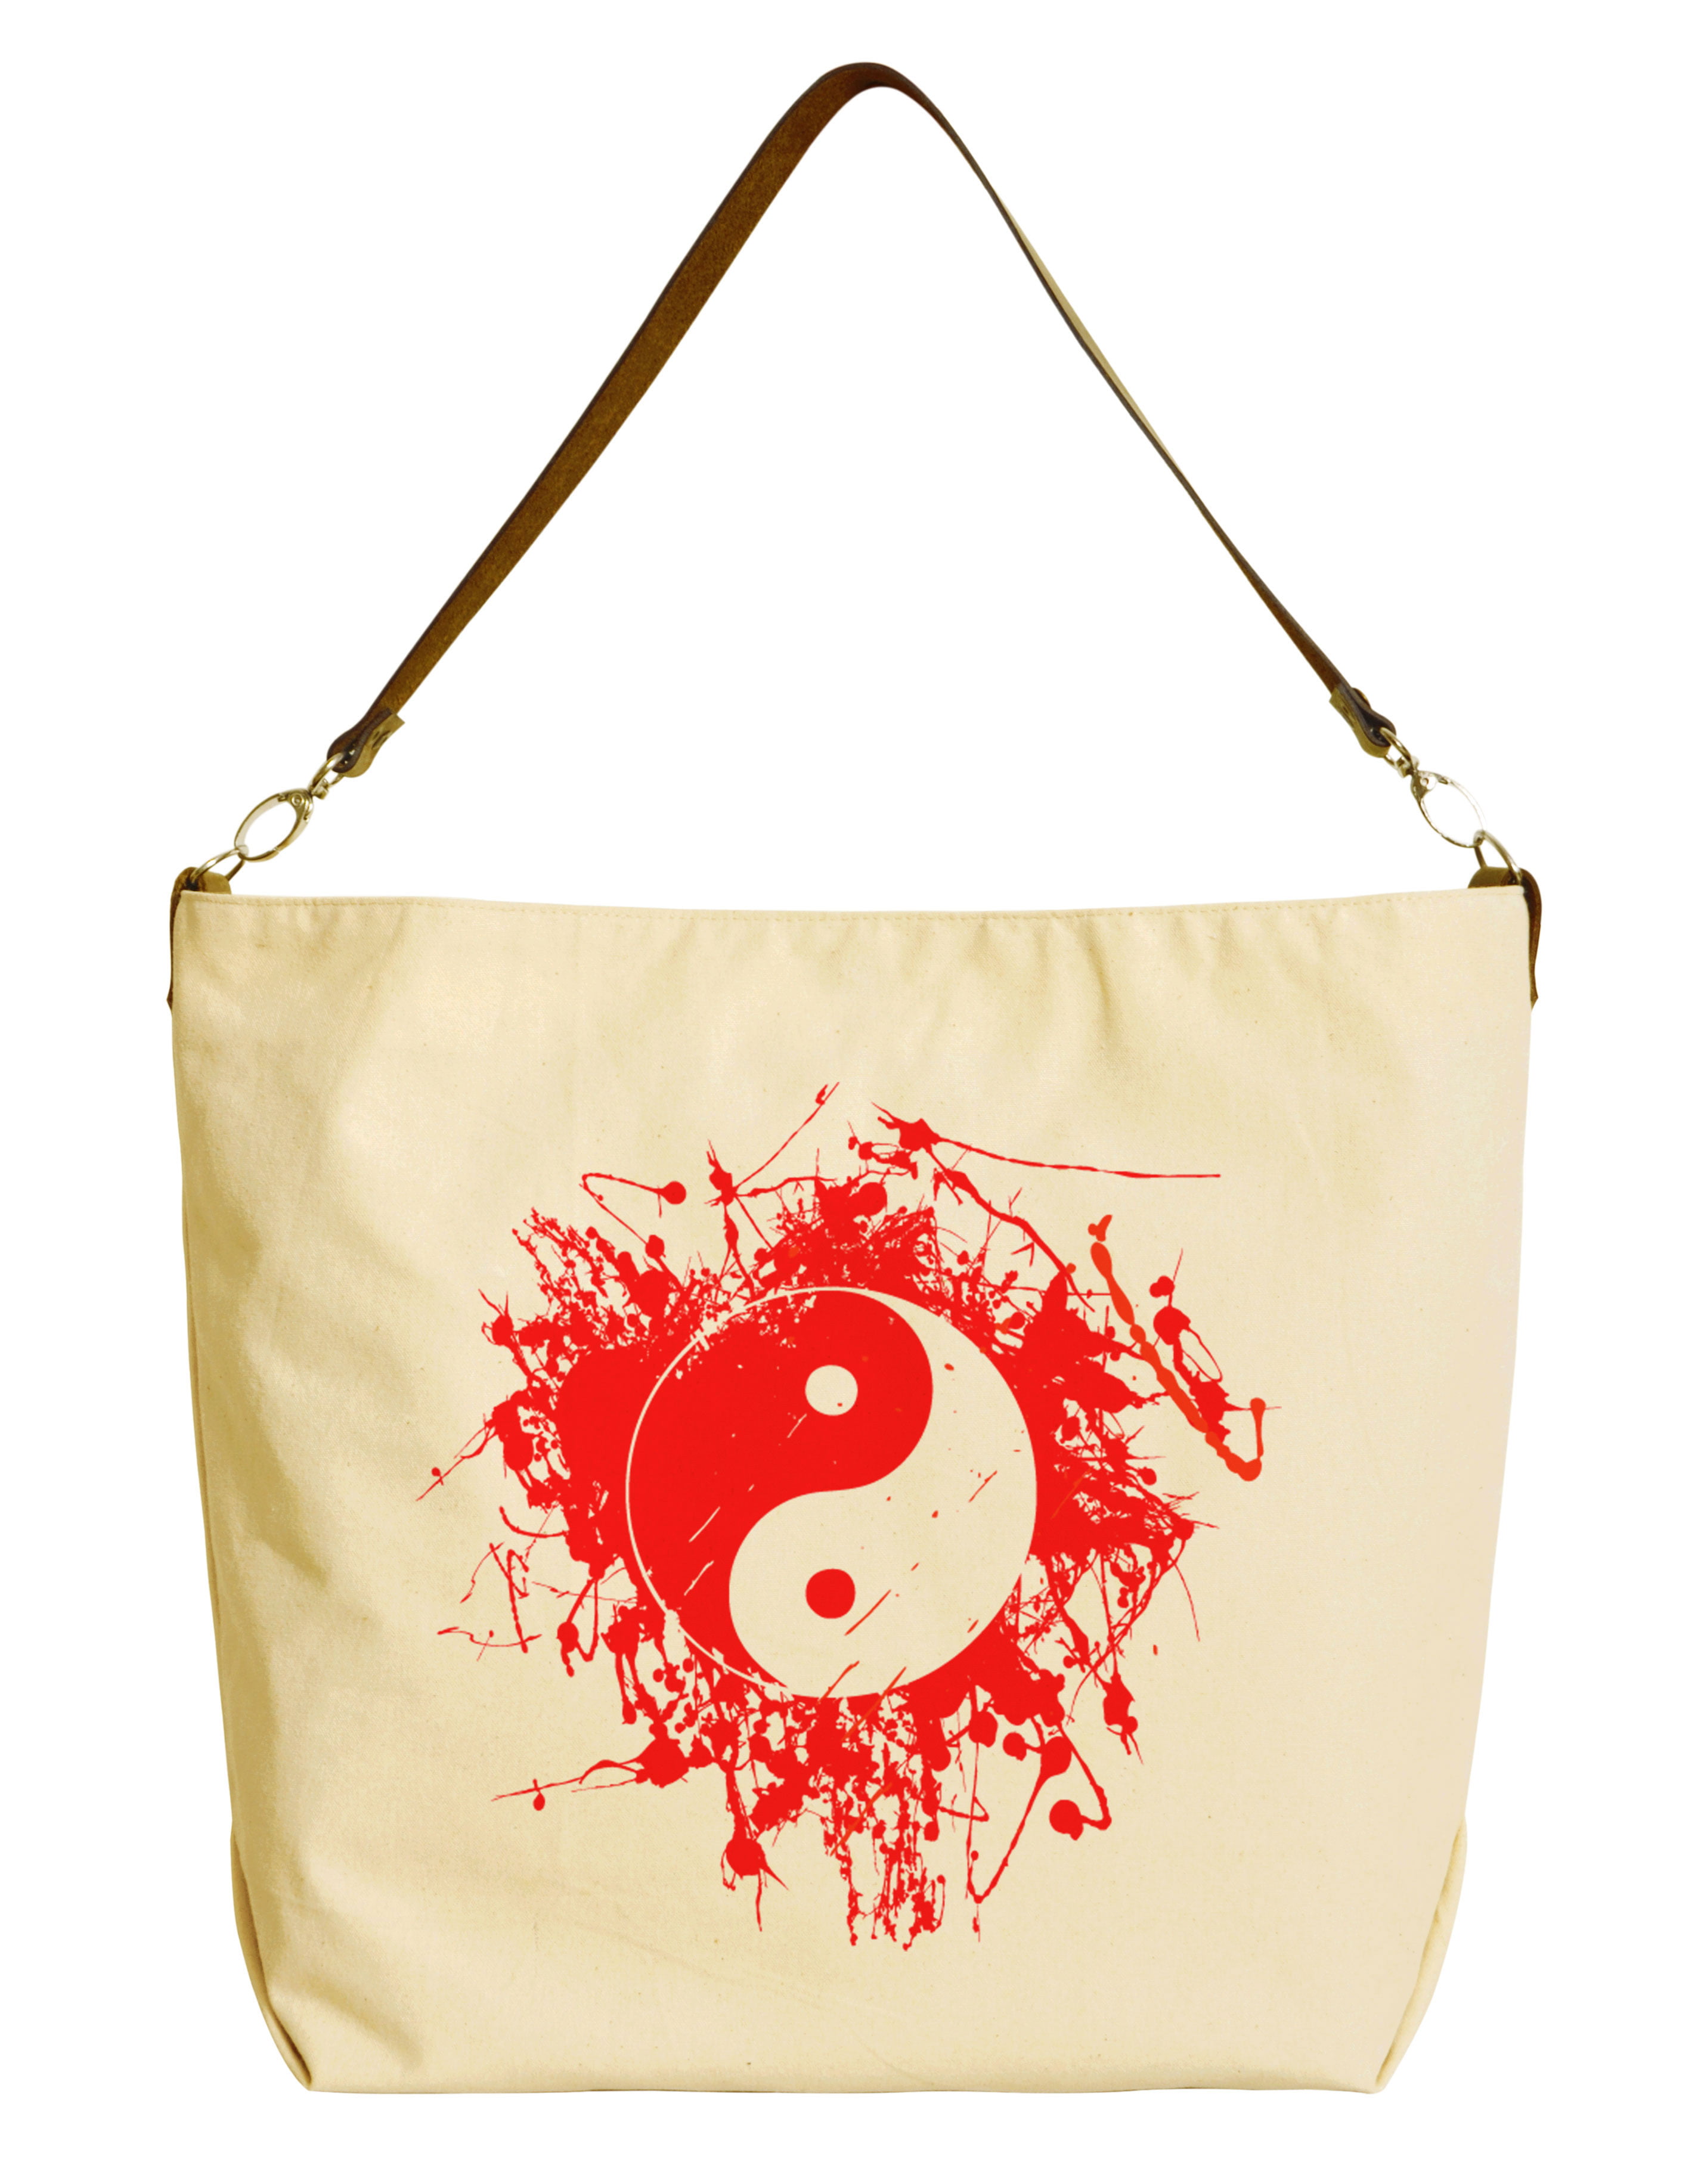 Handbags for Women Vintage Taiji Yinyang Tote Shoulder Bag Satchel for Ladies Girls